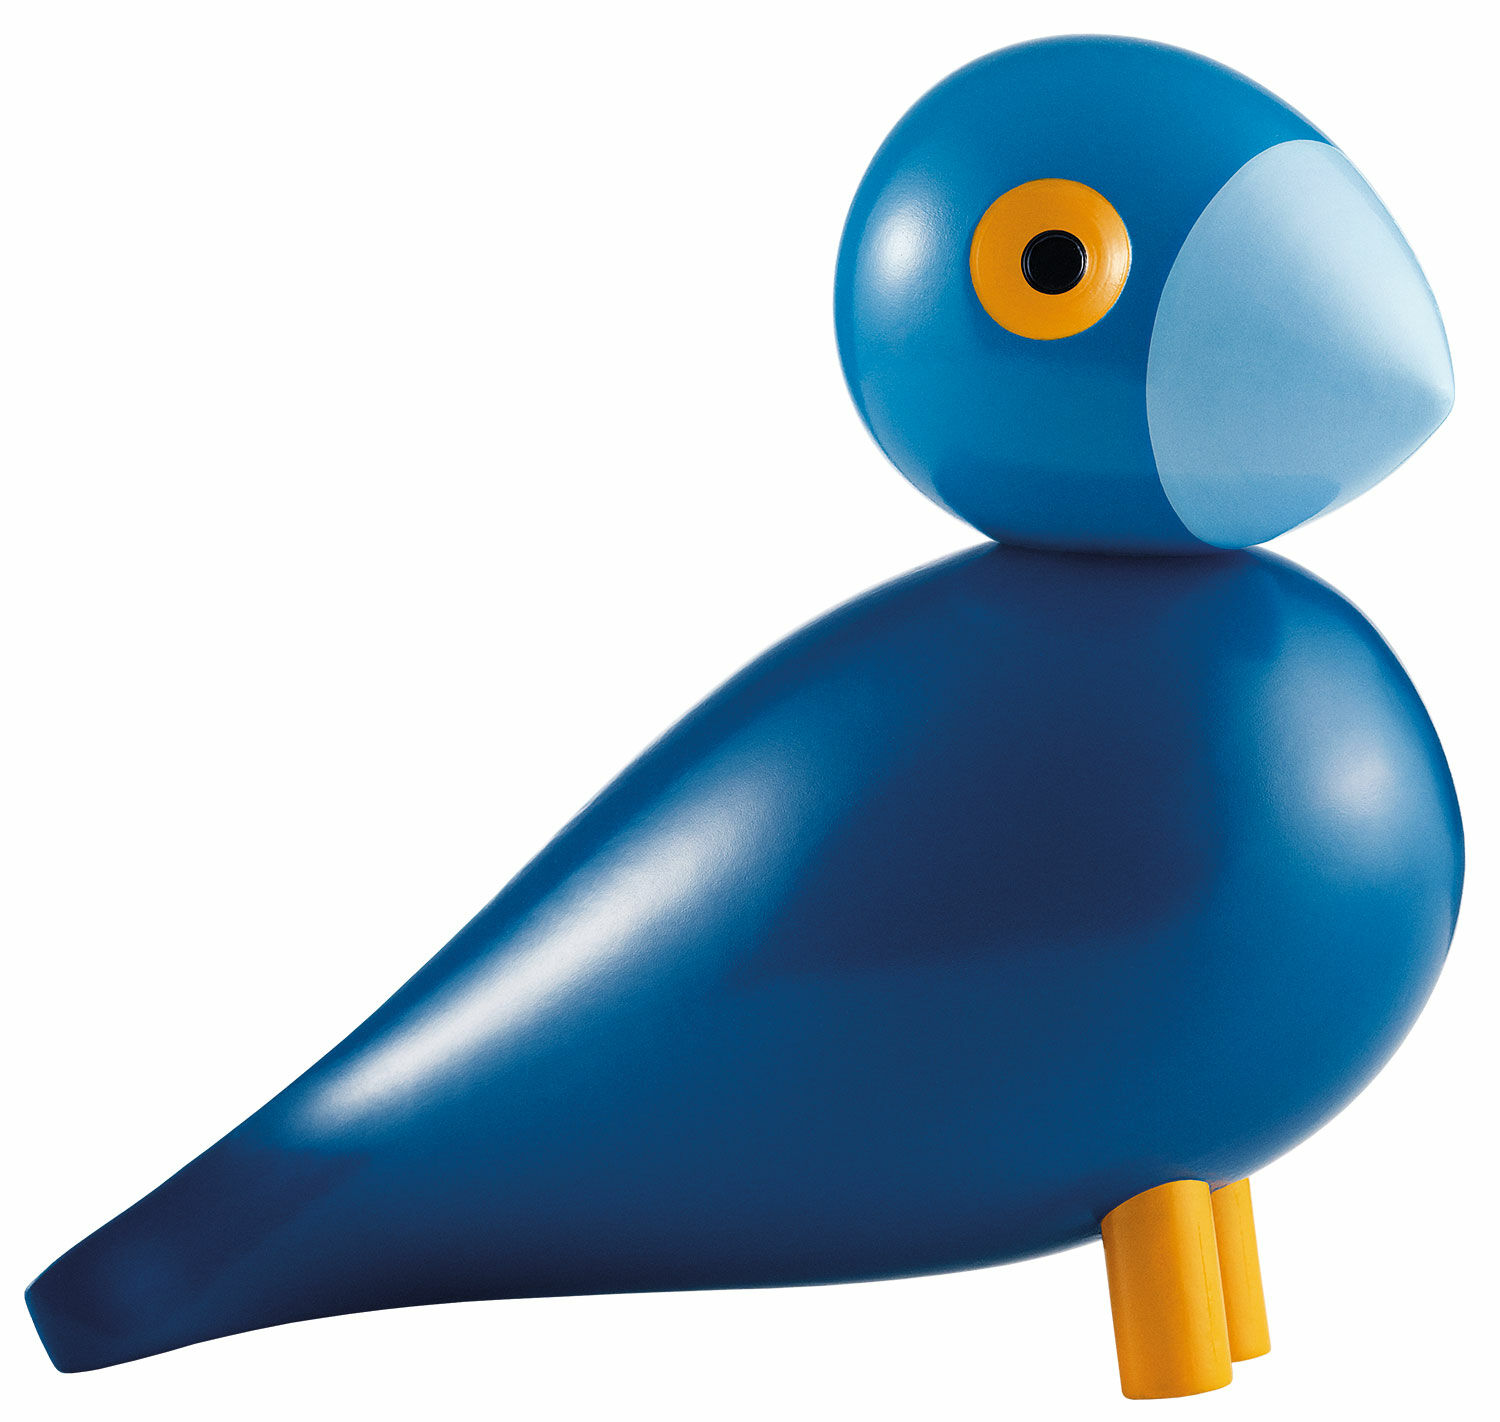 Figurine en bois "Songbird Kay" von Kay Bojesen